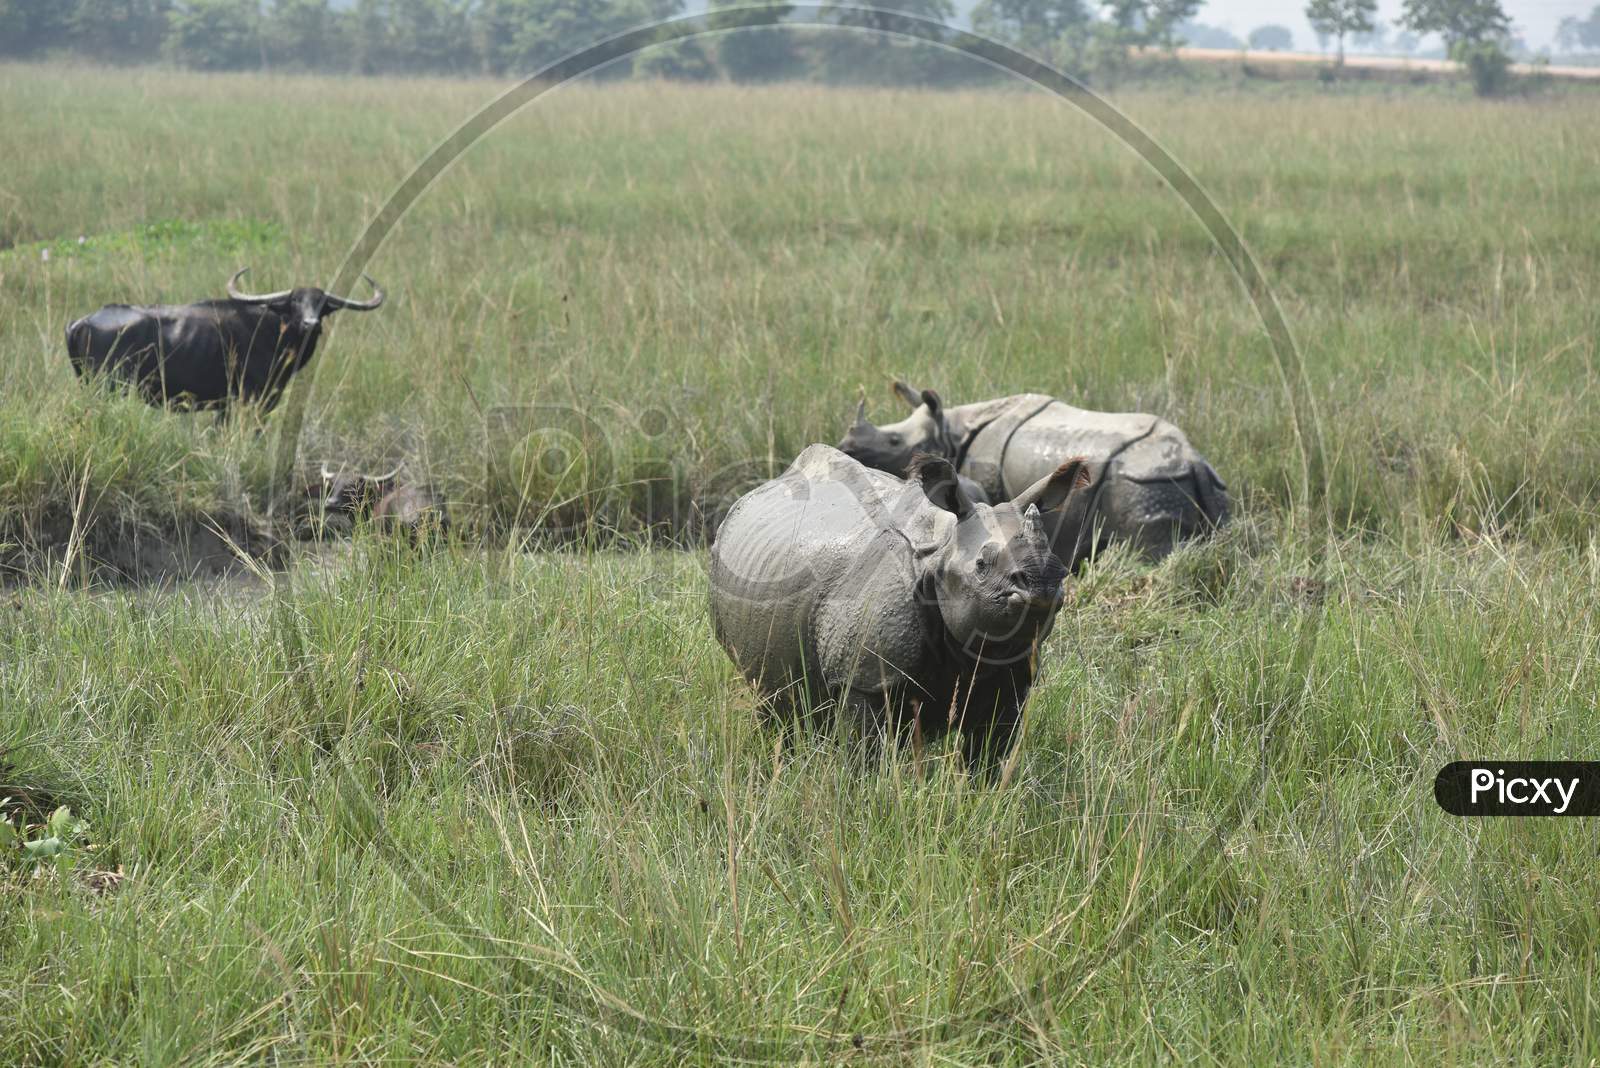 White Rhinoceros  in Tropical Grass Lands at Kaziranga National Park, Assam